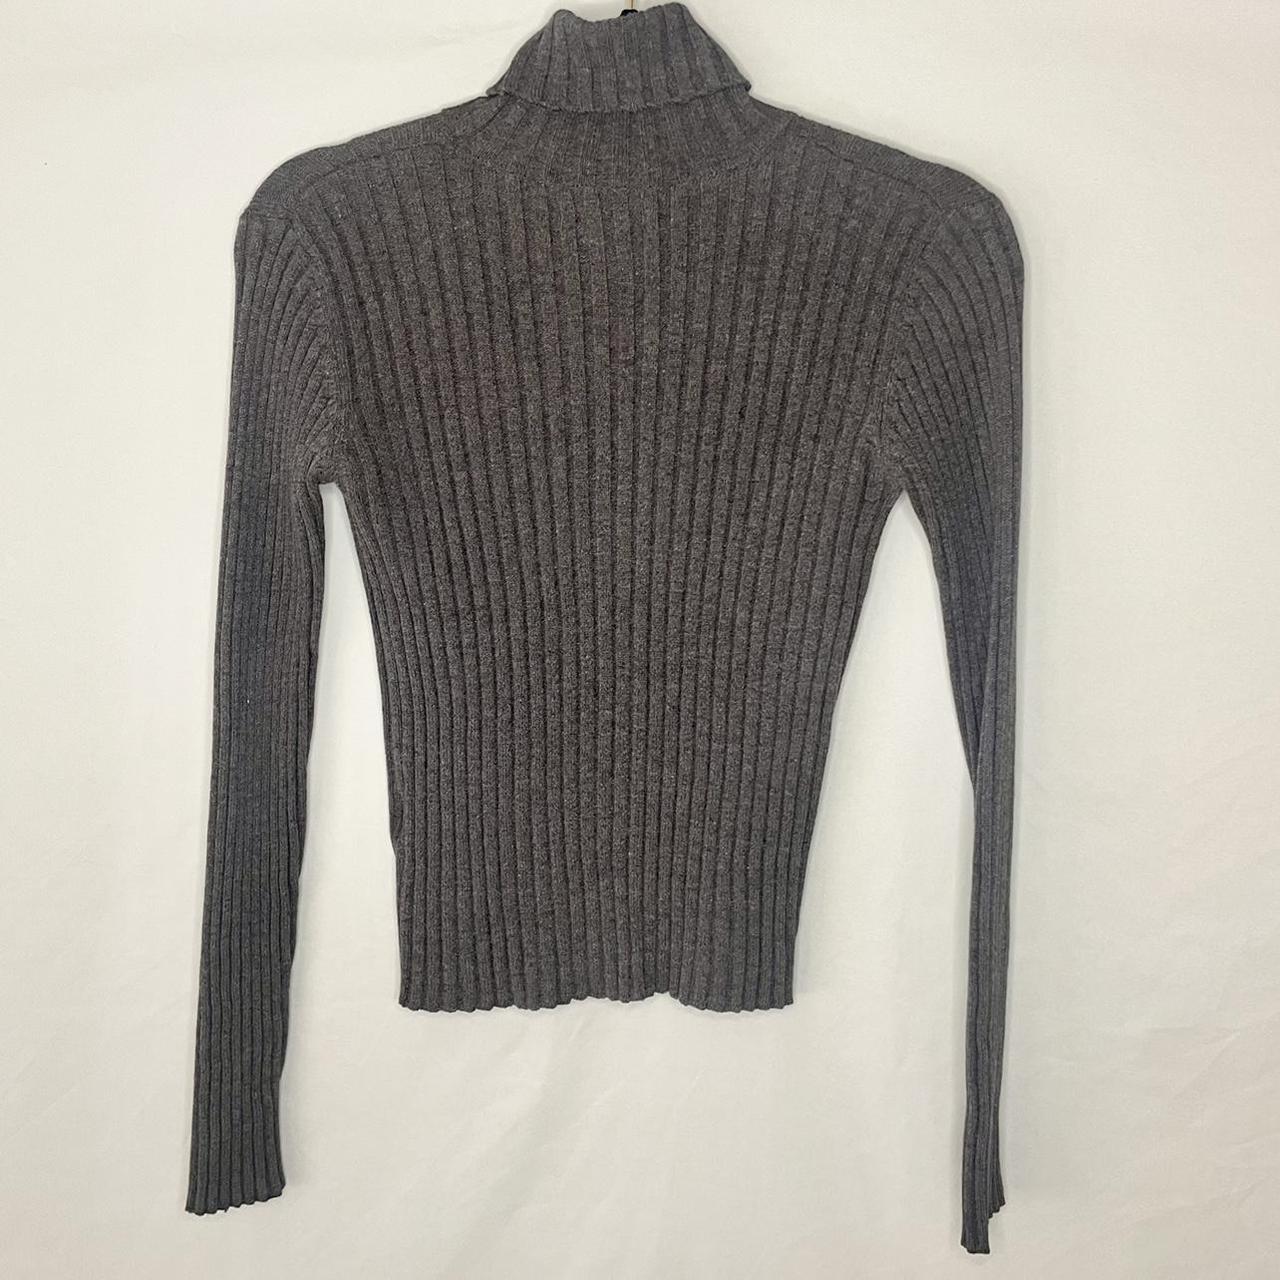 Early 2000s turtleneck sweater by Union Bay, size m,... - Depop